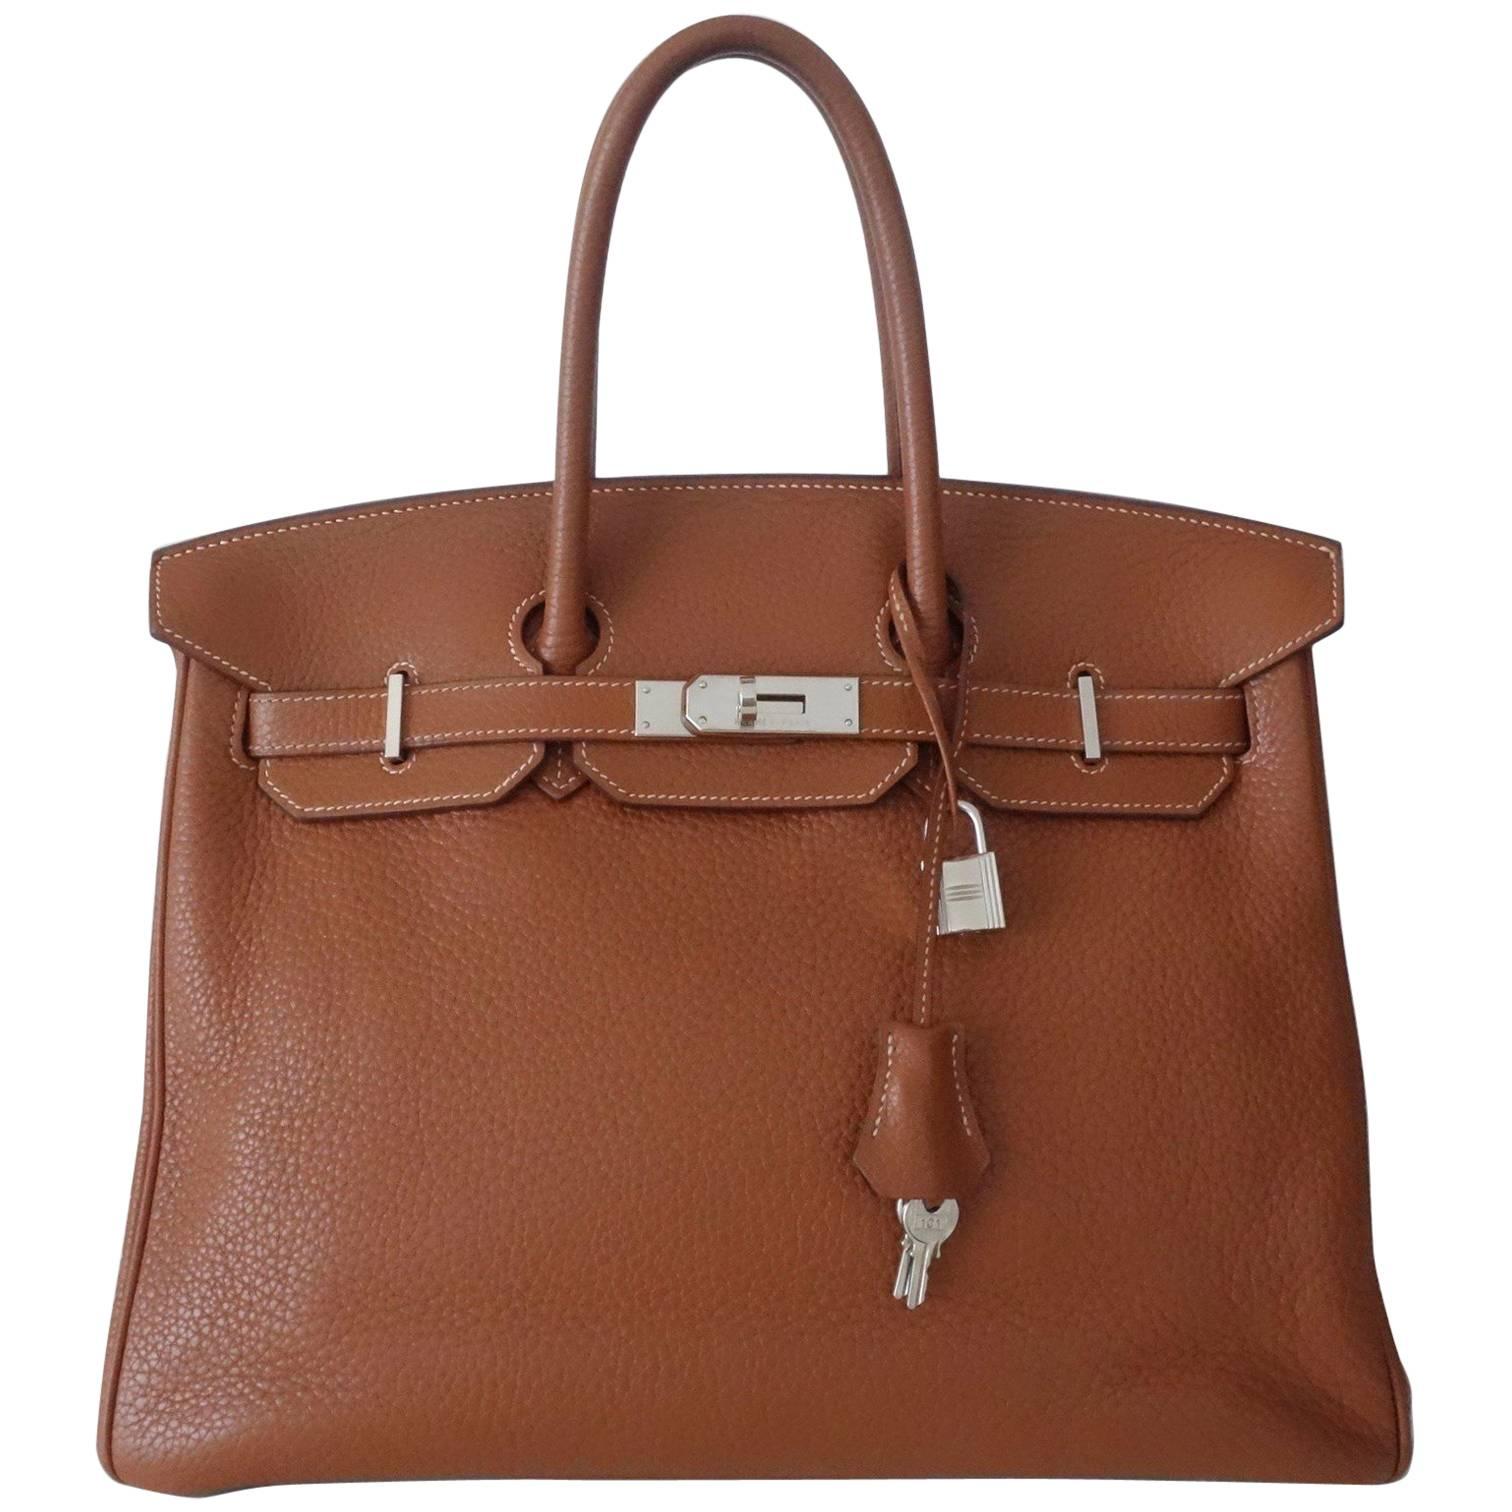 Hermes Birkin Handbag Gold Taurillon Clemence Leather PHW 35 cm